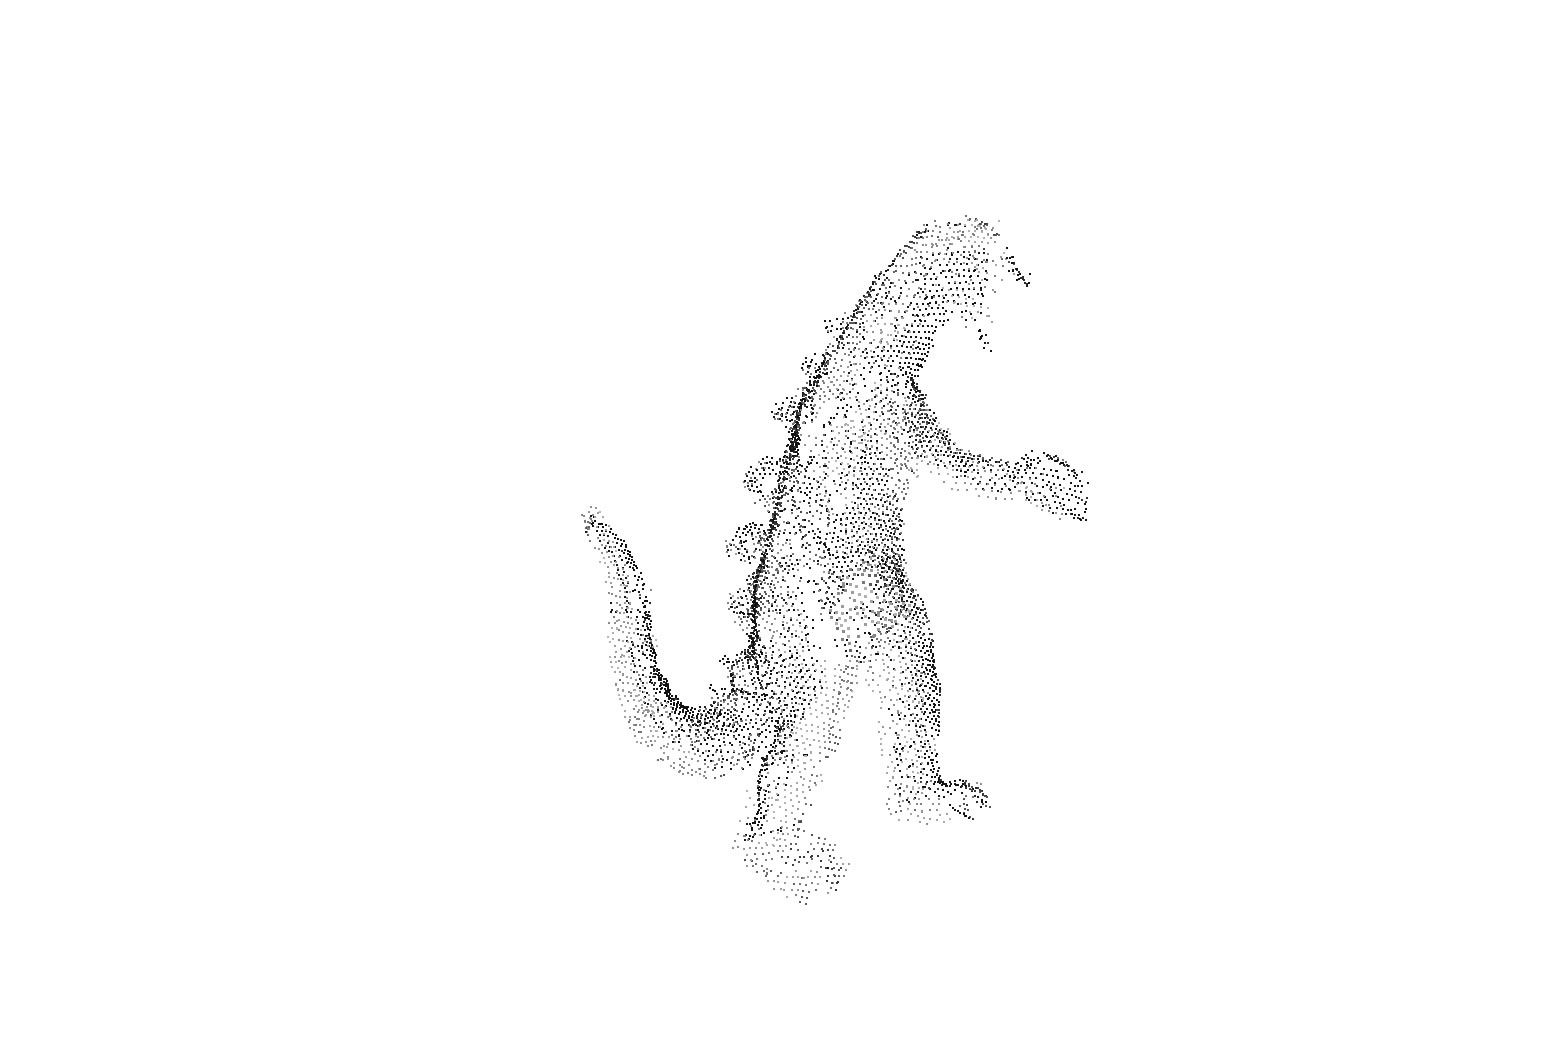 Oxford Dinosaur: VisualSFM